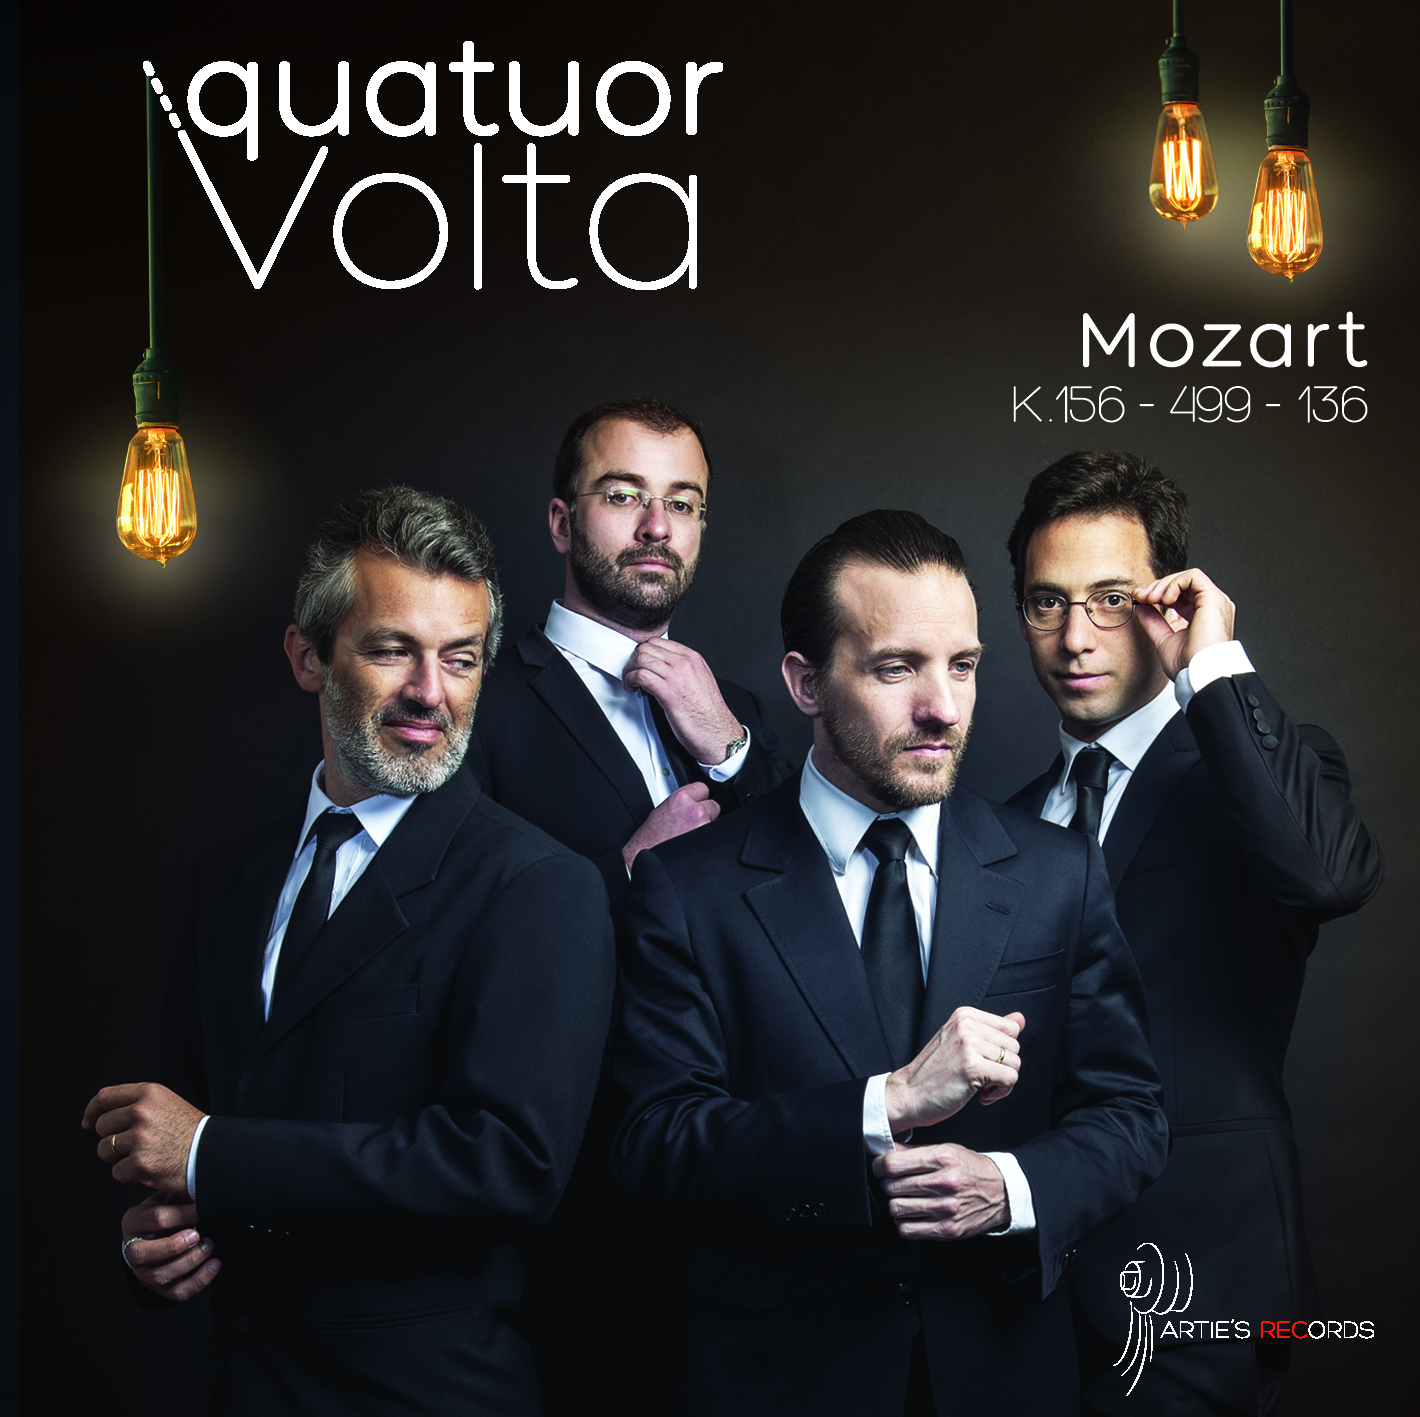 Pochette album quatuor volta Mozart